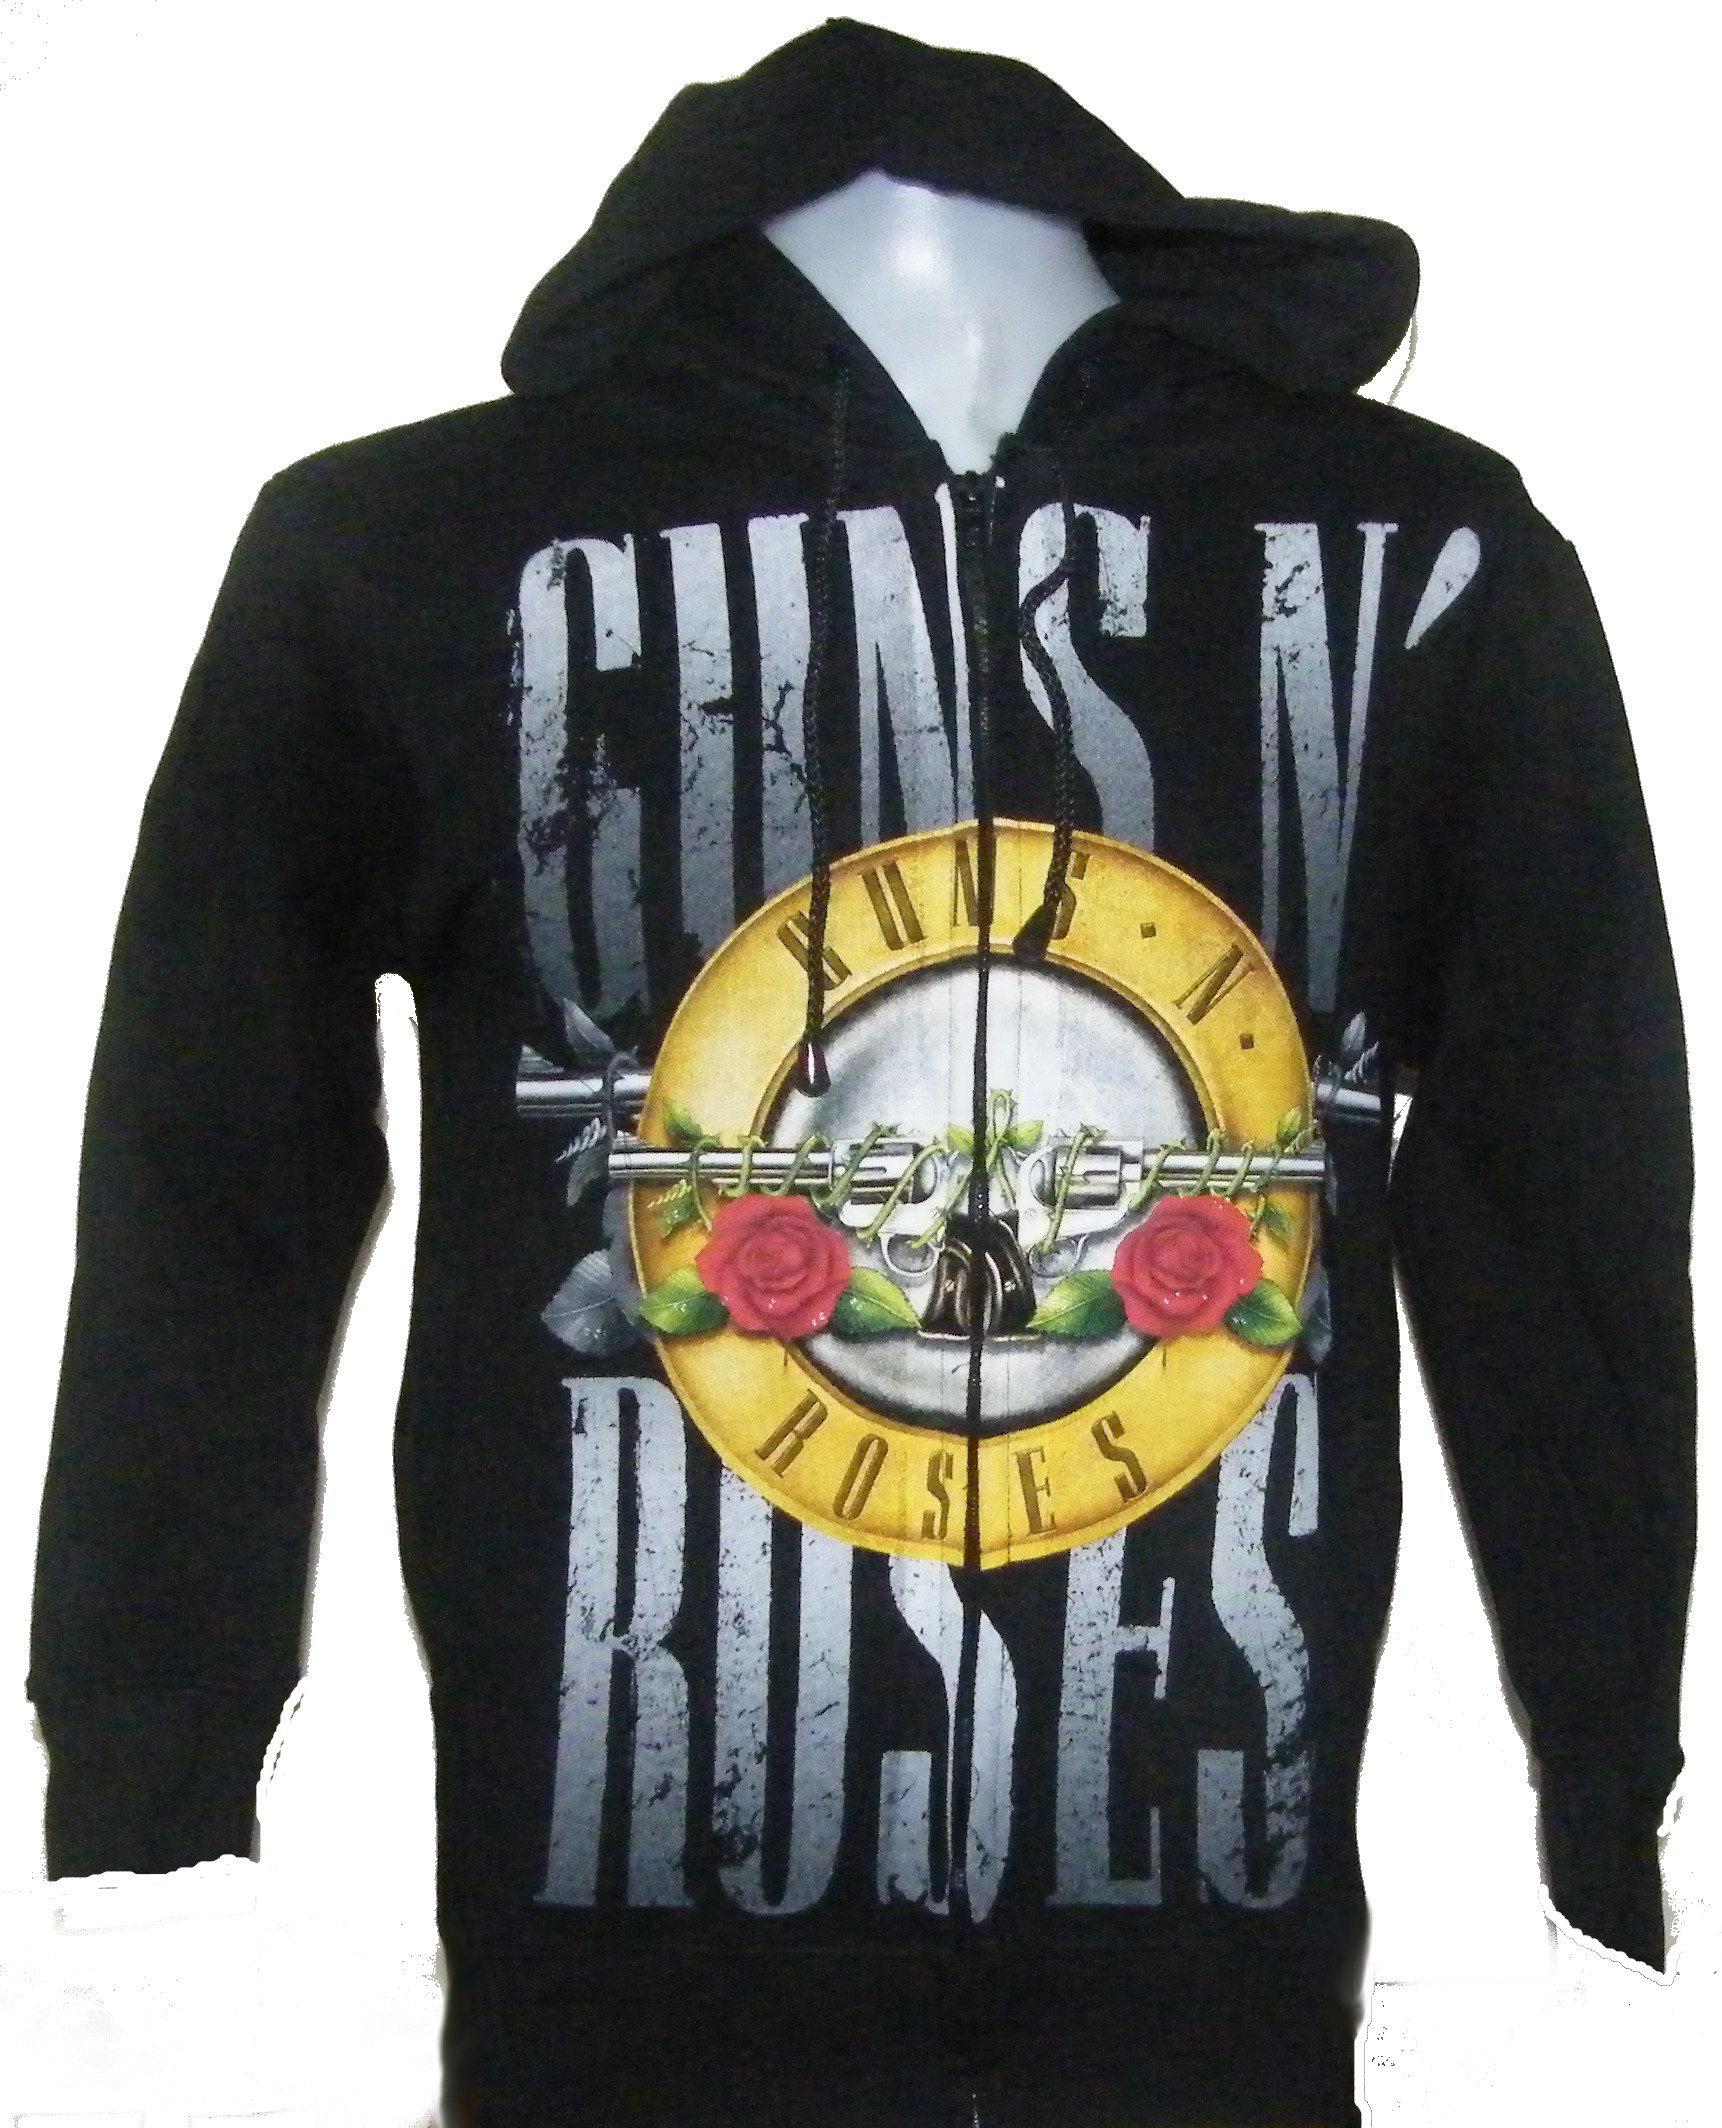 Guns and roses hoodie